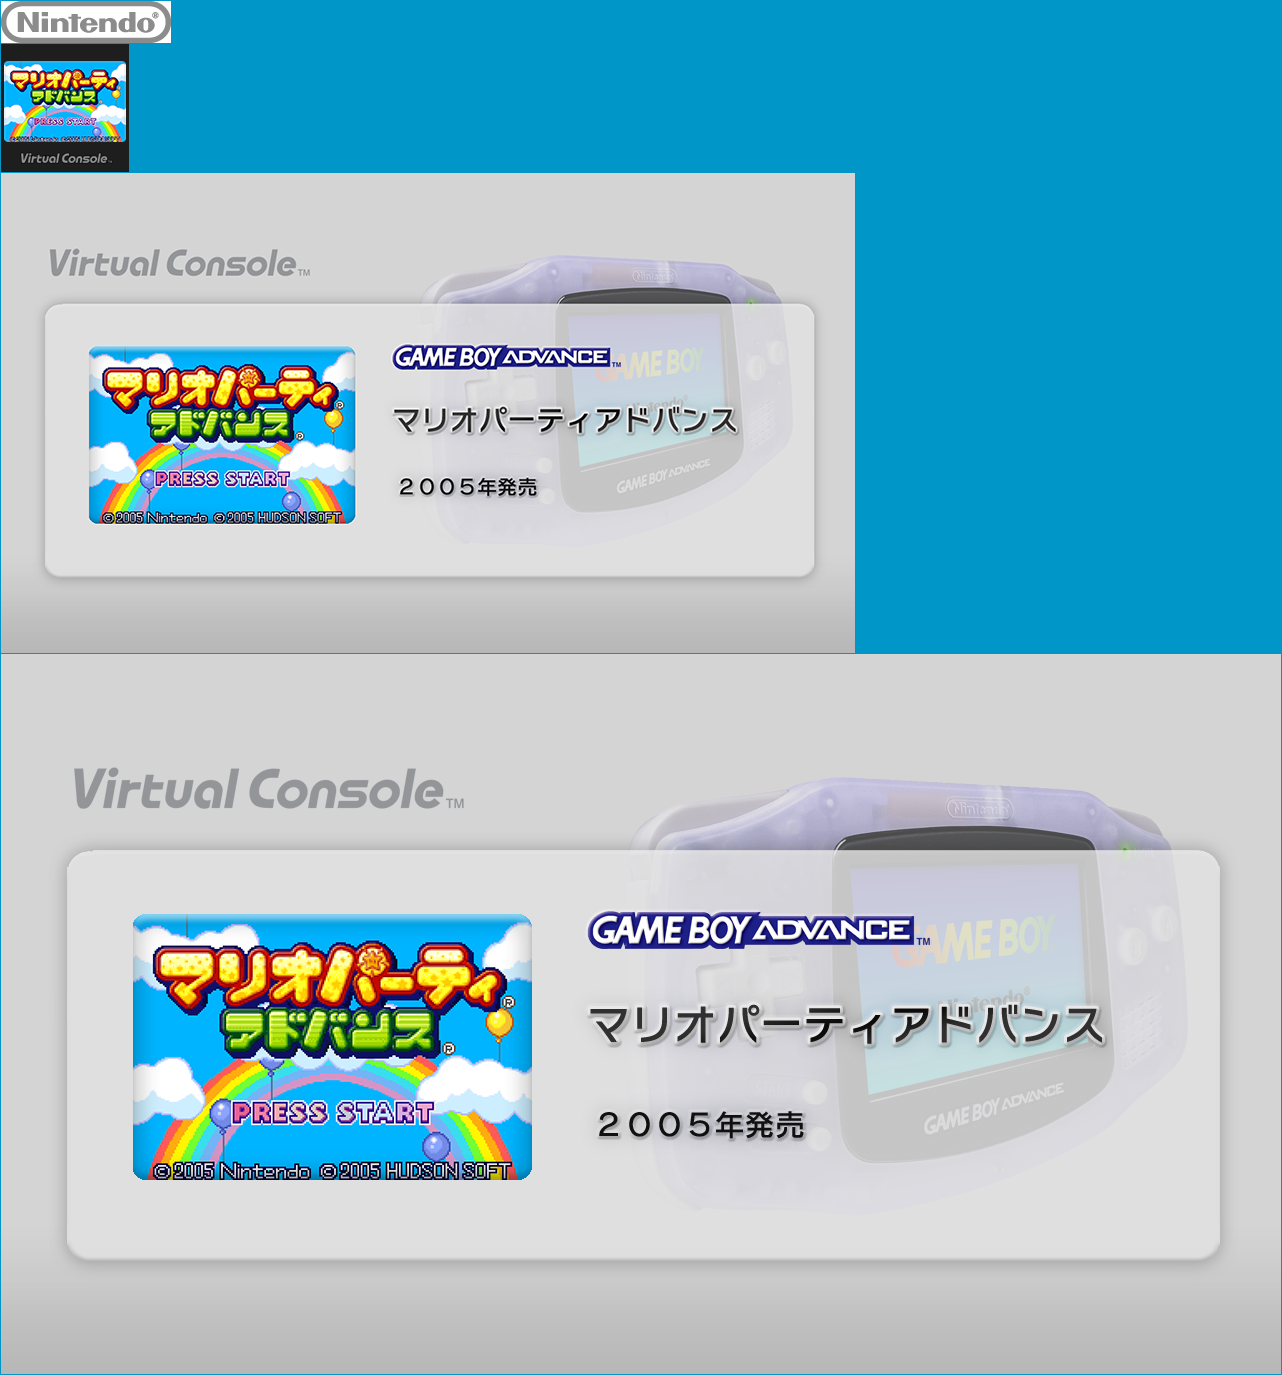 Virtual Console - Mario Party Advance